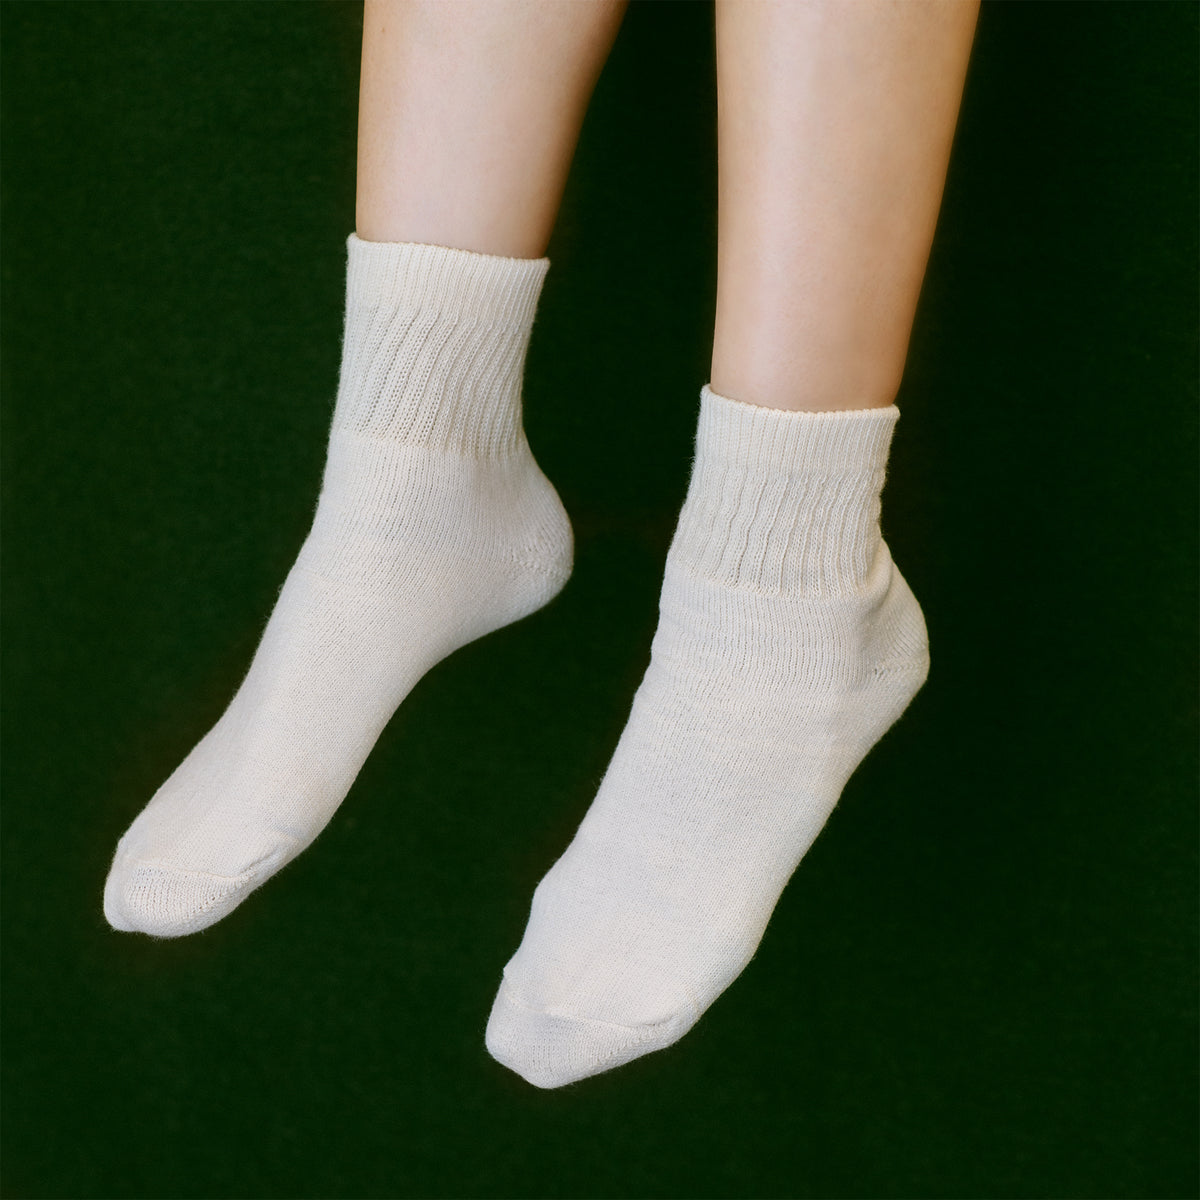 Organic Cotton Socks - Cream - Short Top